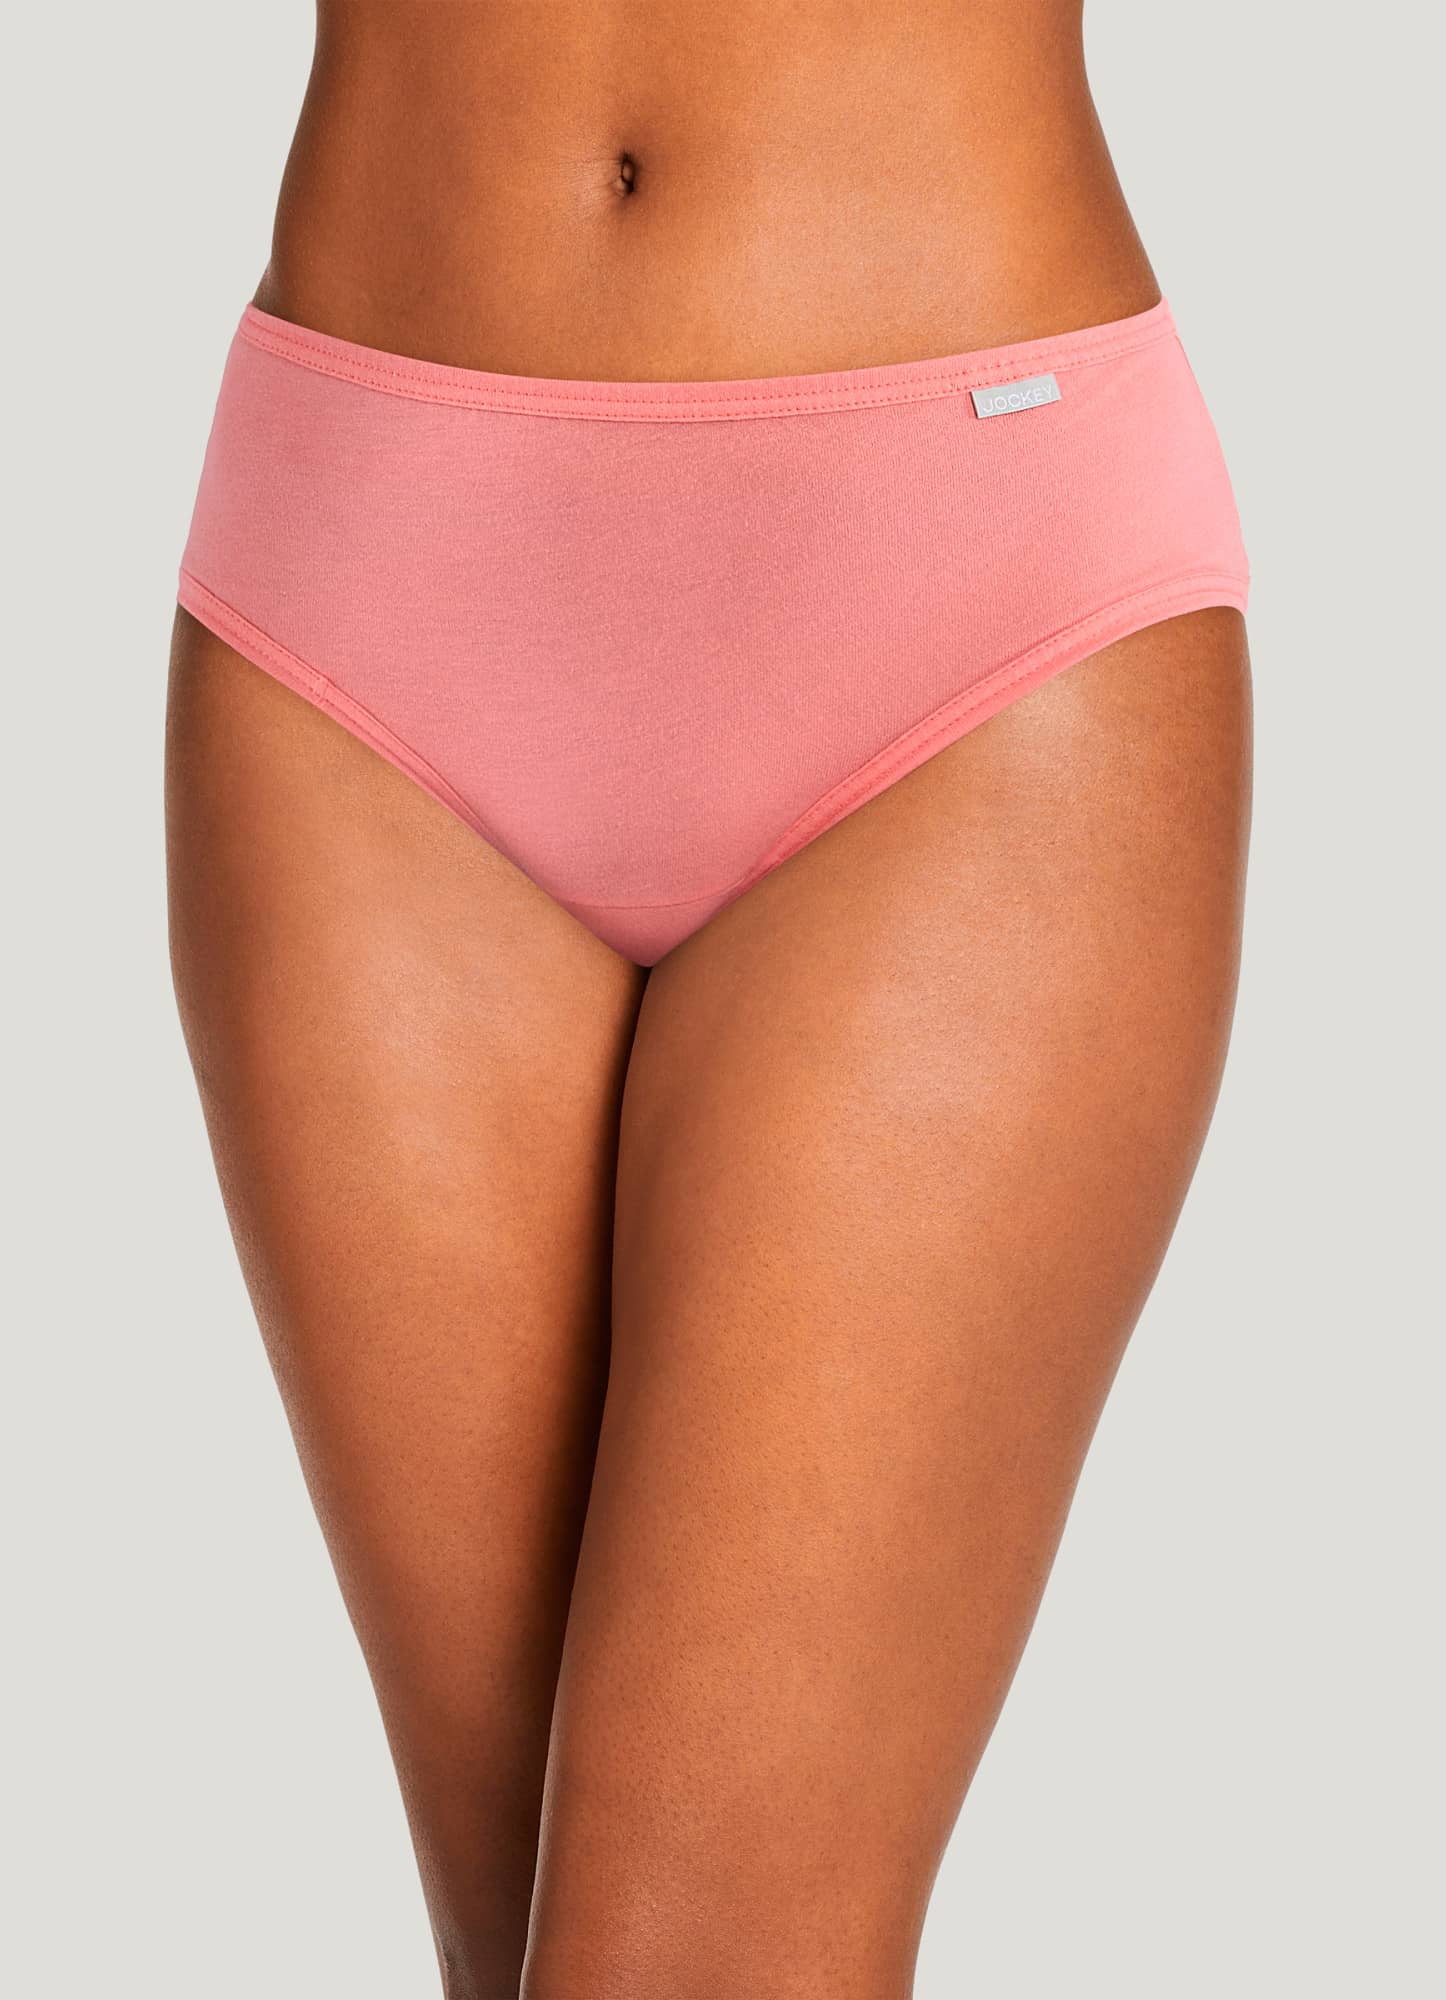 TOWED22 Cotton Underwear for Women Cheeky High Cut Breathable Hipster  Bikini Panties Womens Plus Size Underwear(B,XXL)